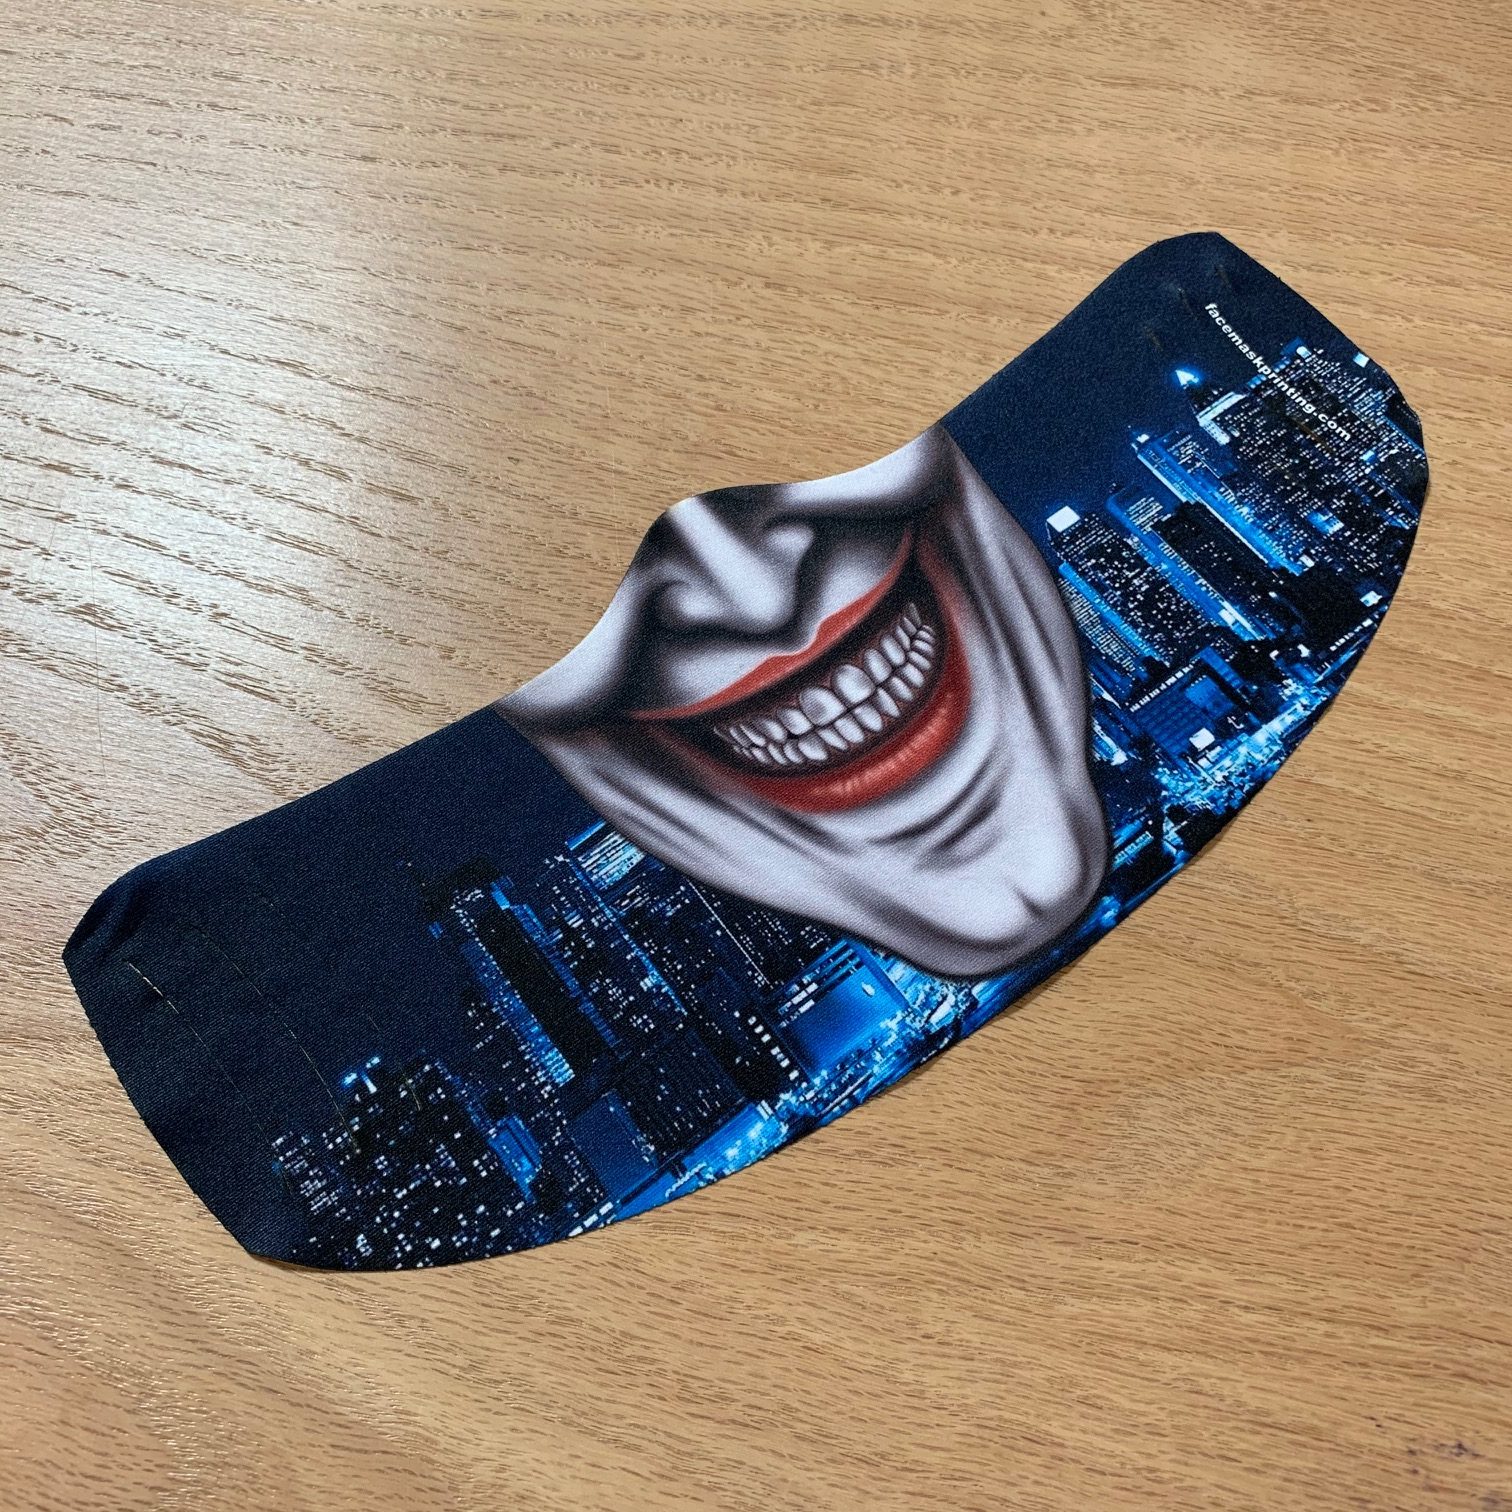 Joker Mask | Mask Face Printing